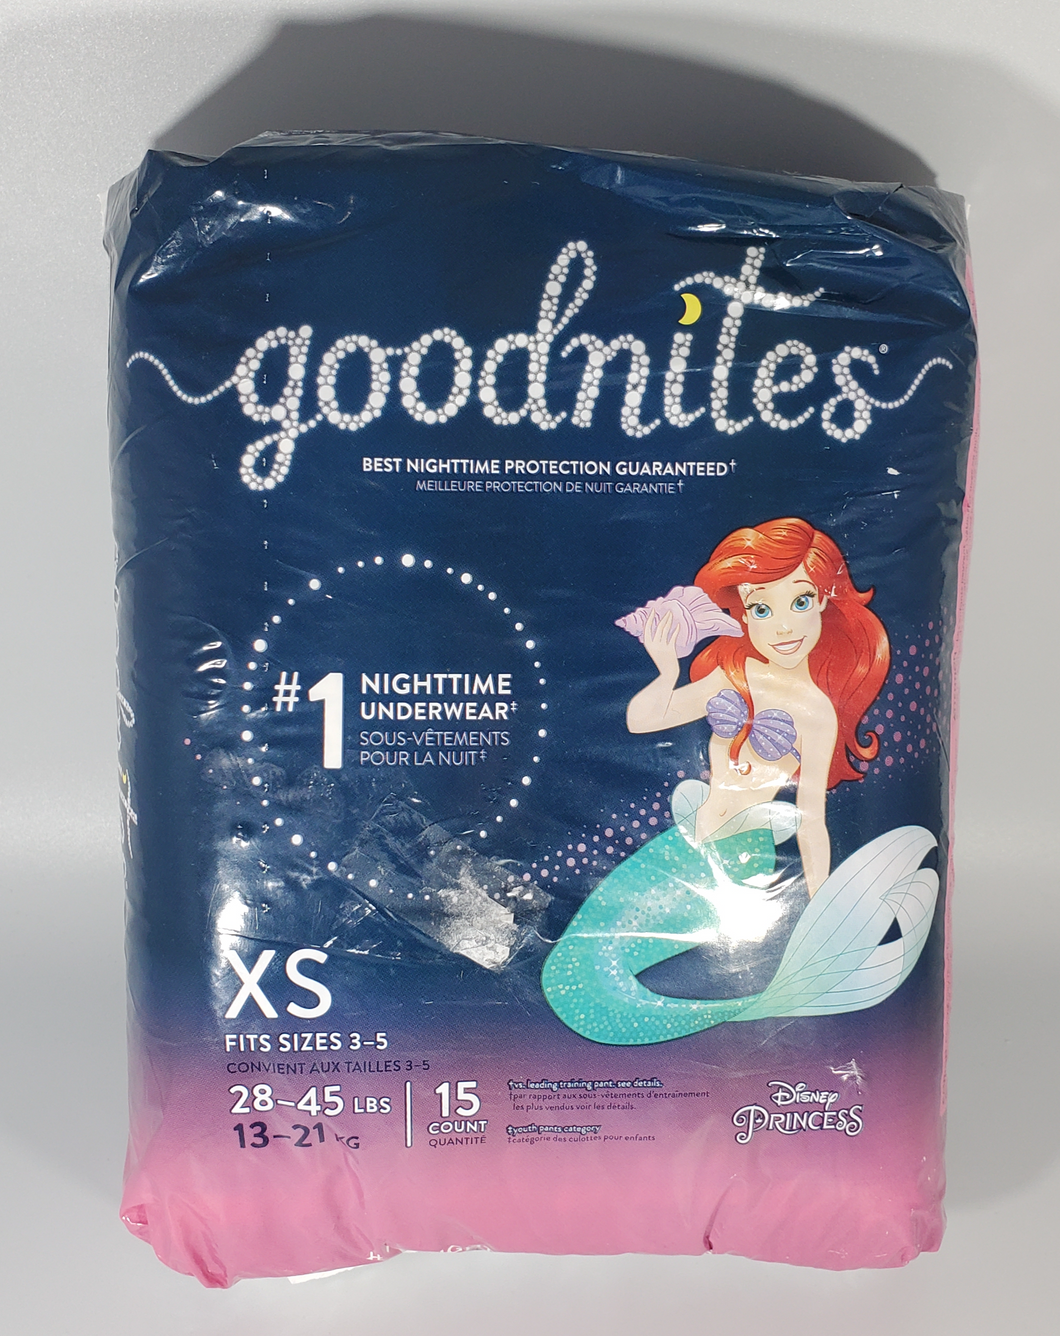 GoodNites Bedtime Bedwetting Underwear for Girls, XS, 15 Ct